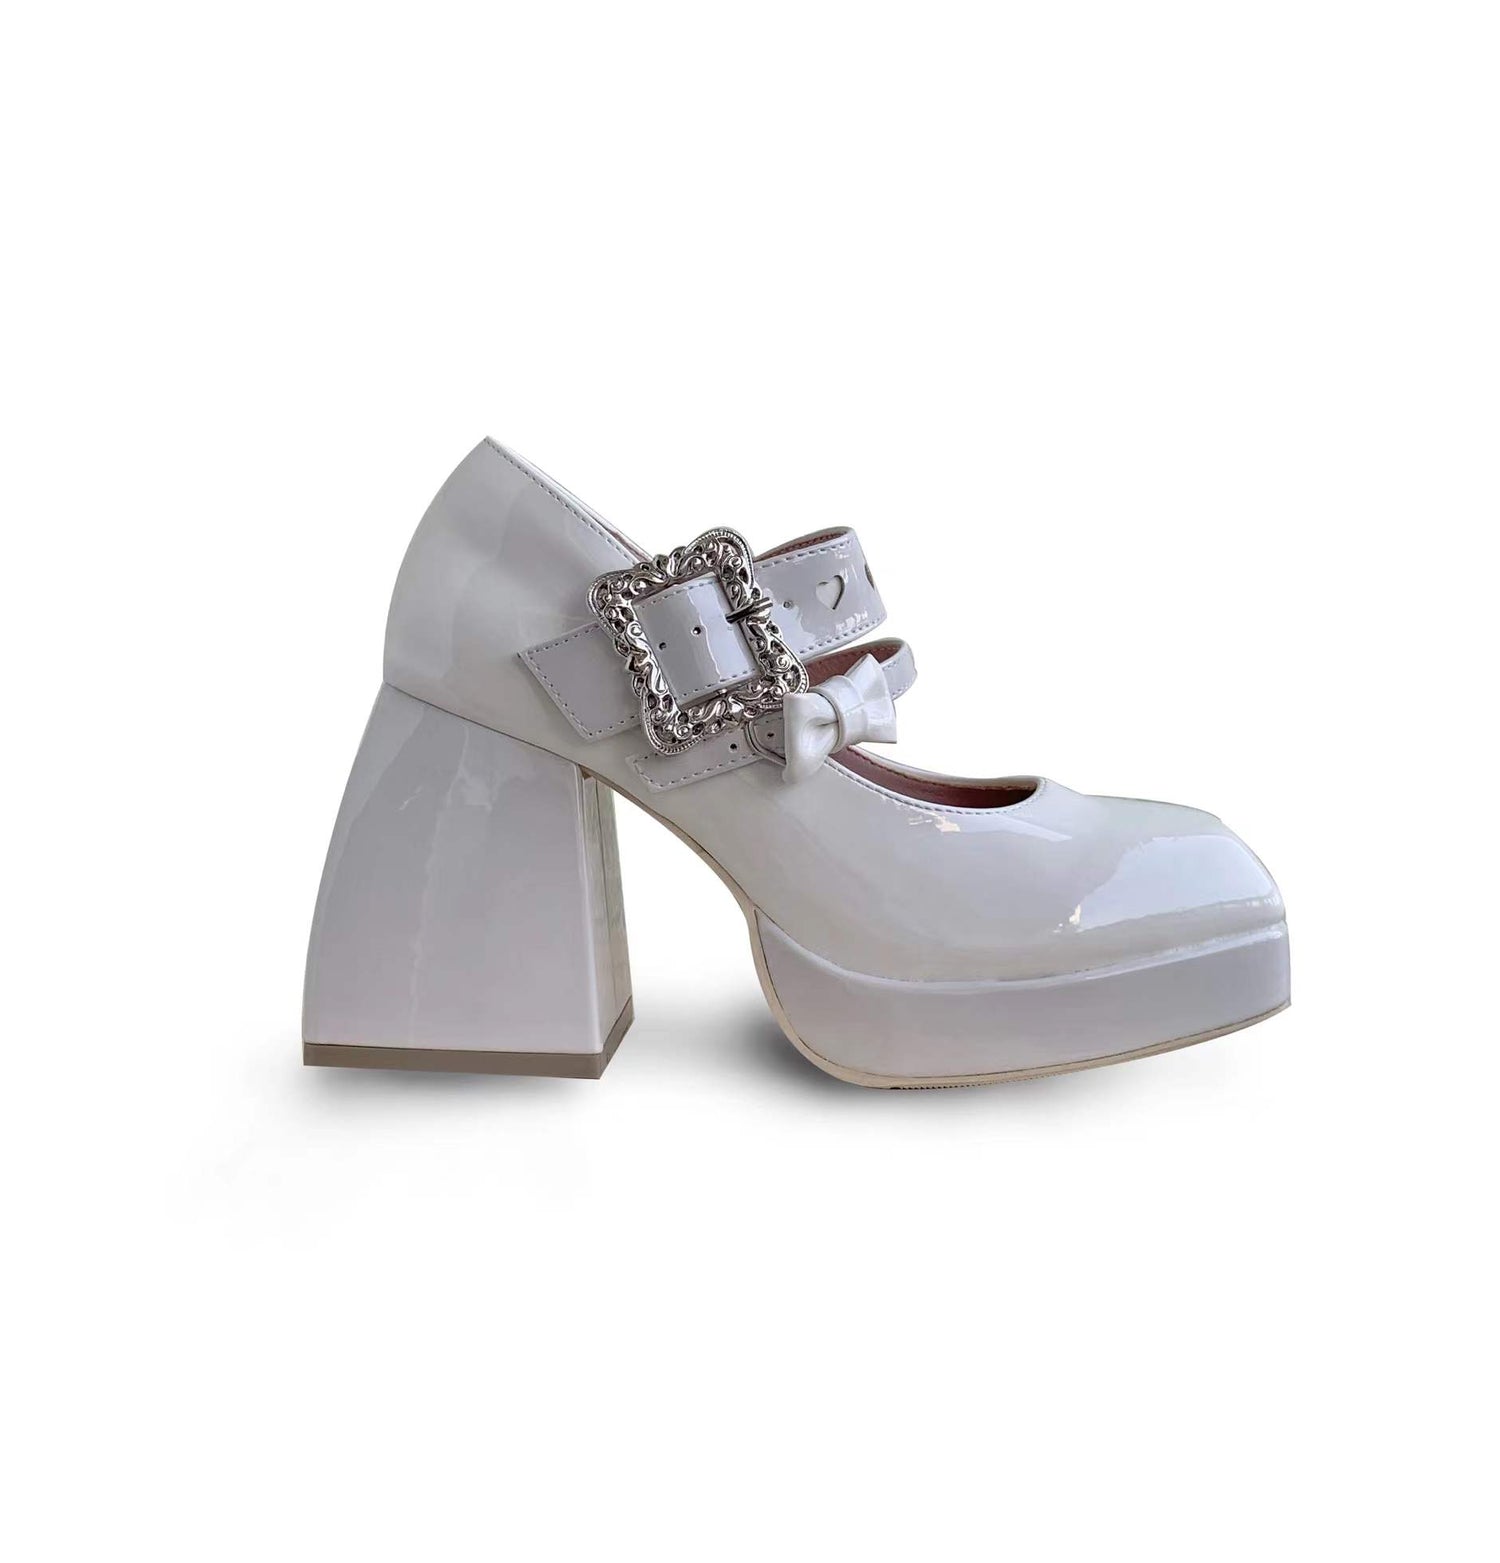 Heeled Pumps  | Women Platform and thick heeled Mary jane Shoes | White |  34| thecurvestory.myshopify.com